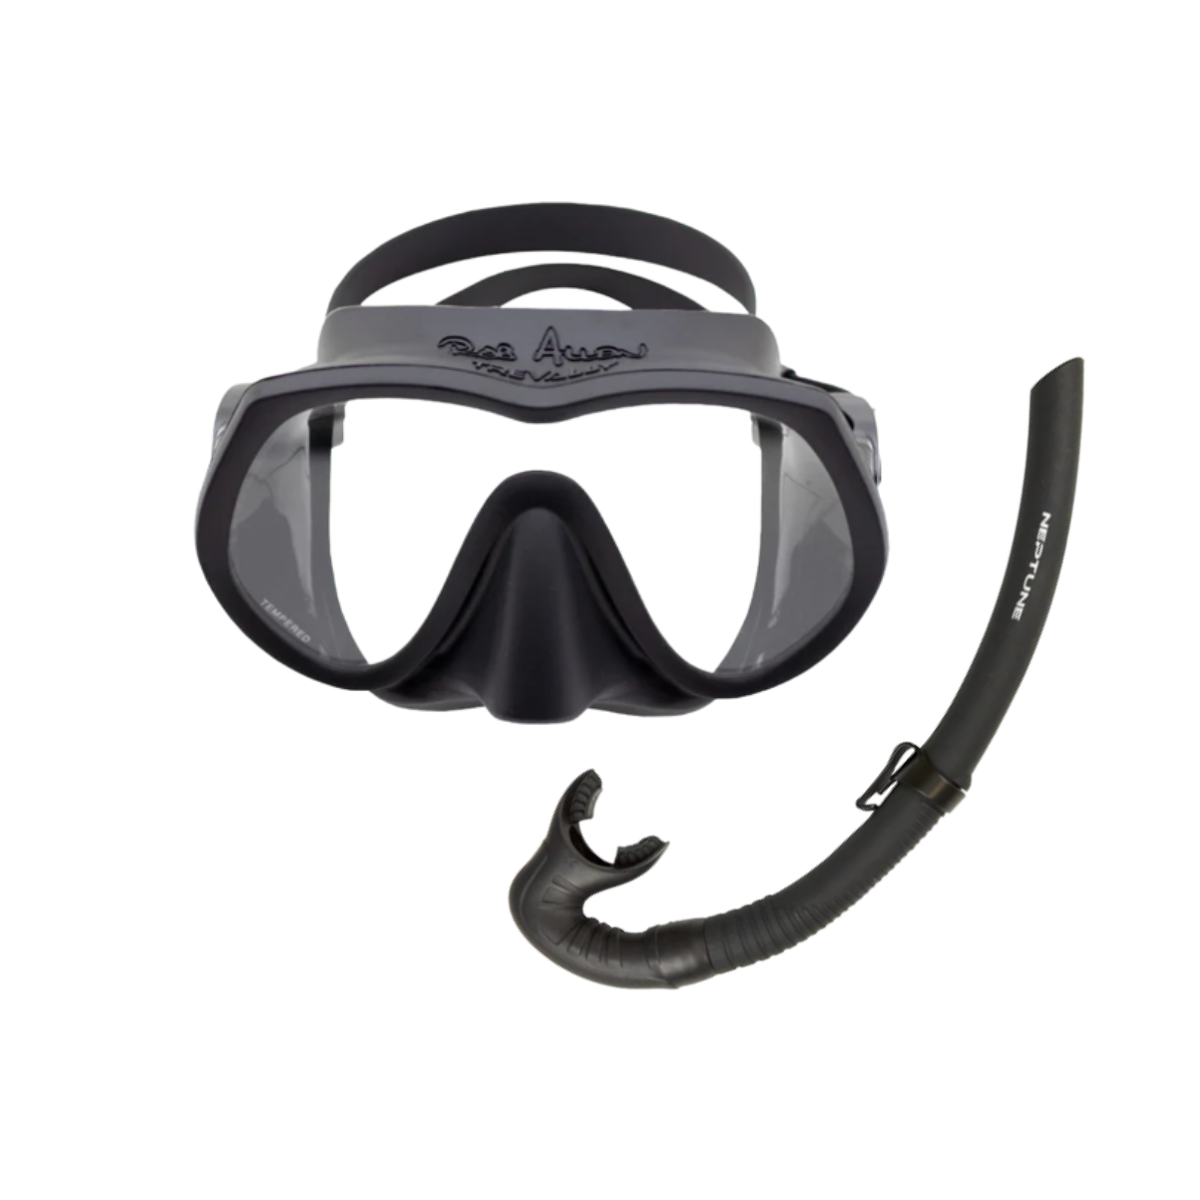 Rob Allen Trevally Mask & Neptune S4 Silicone Blast Snorkel